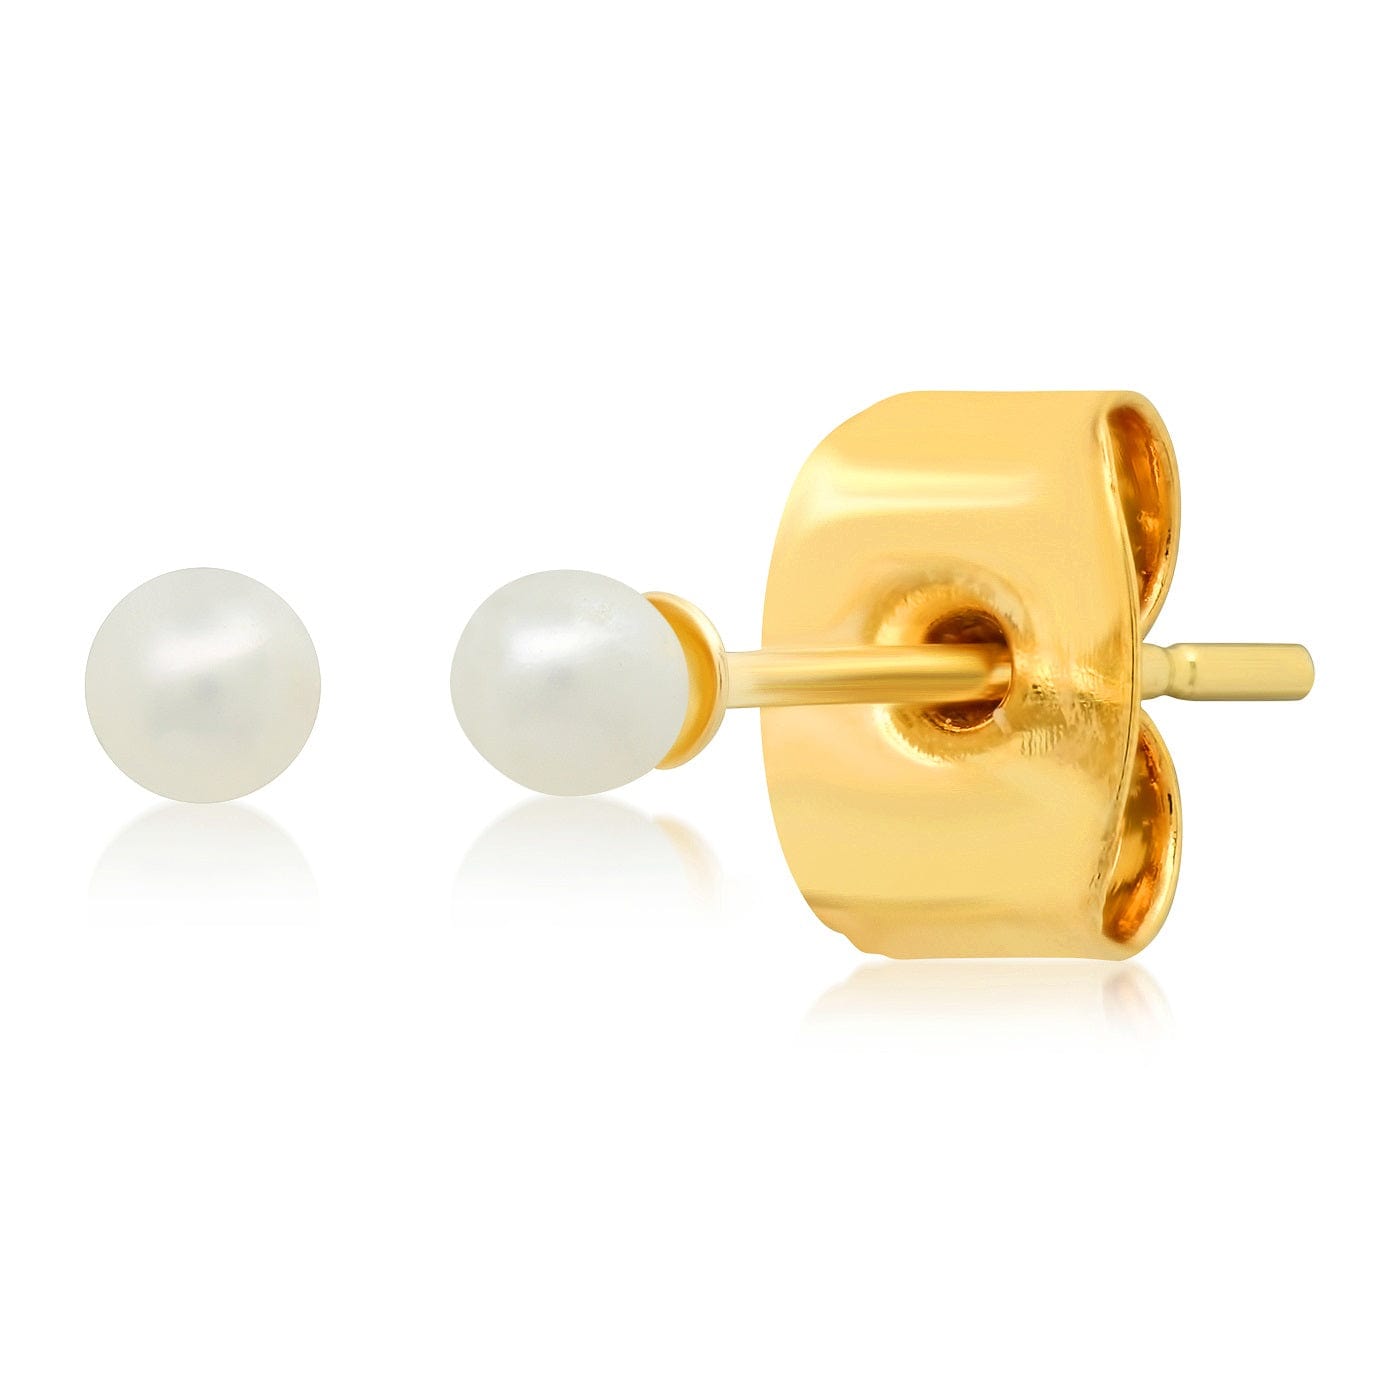 TAI JEWELRY Earrings Petite Pearl Studs | 2mm